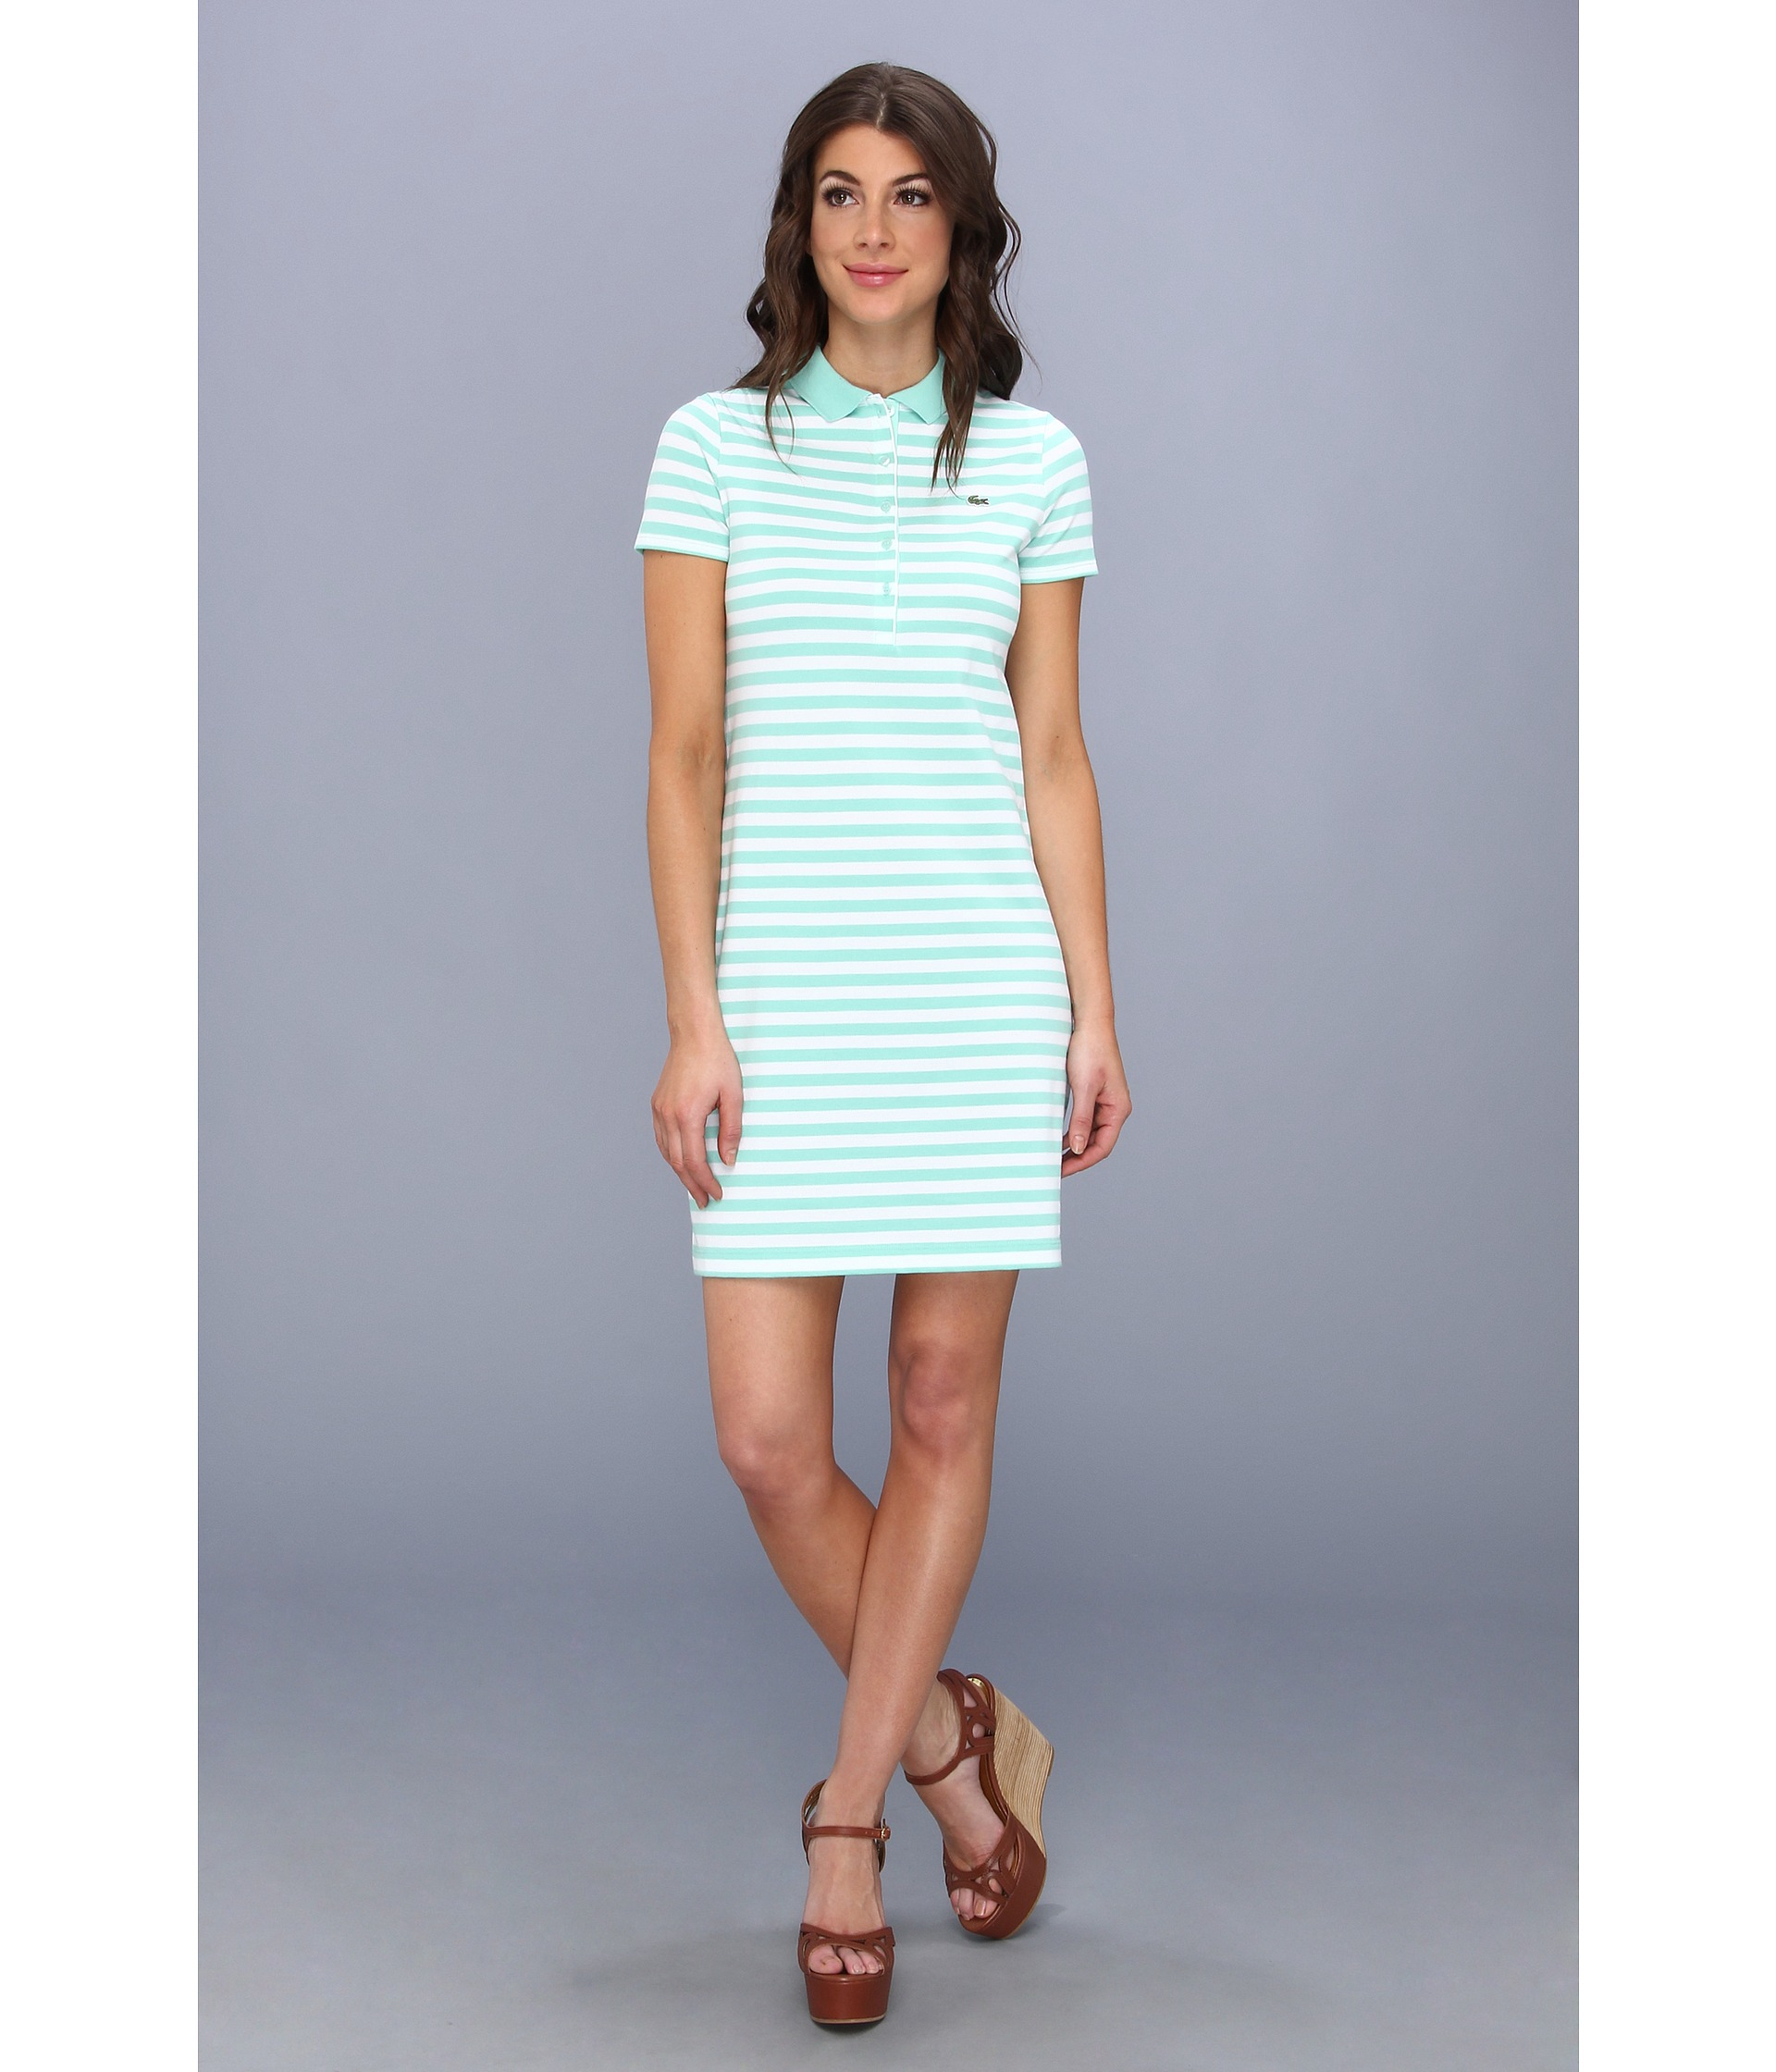 Lyst - Lacoste Short Sleeve Stretch Pique Stripe Polo Dress in Blue